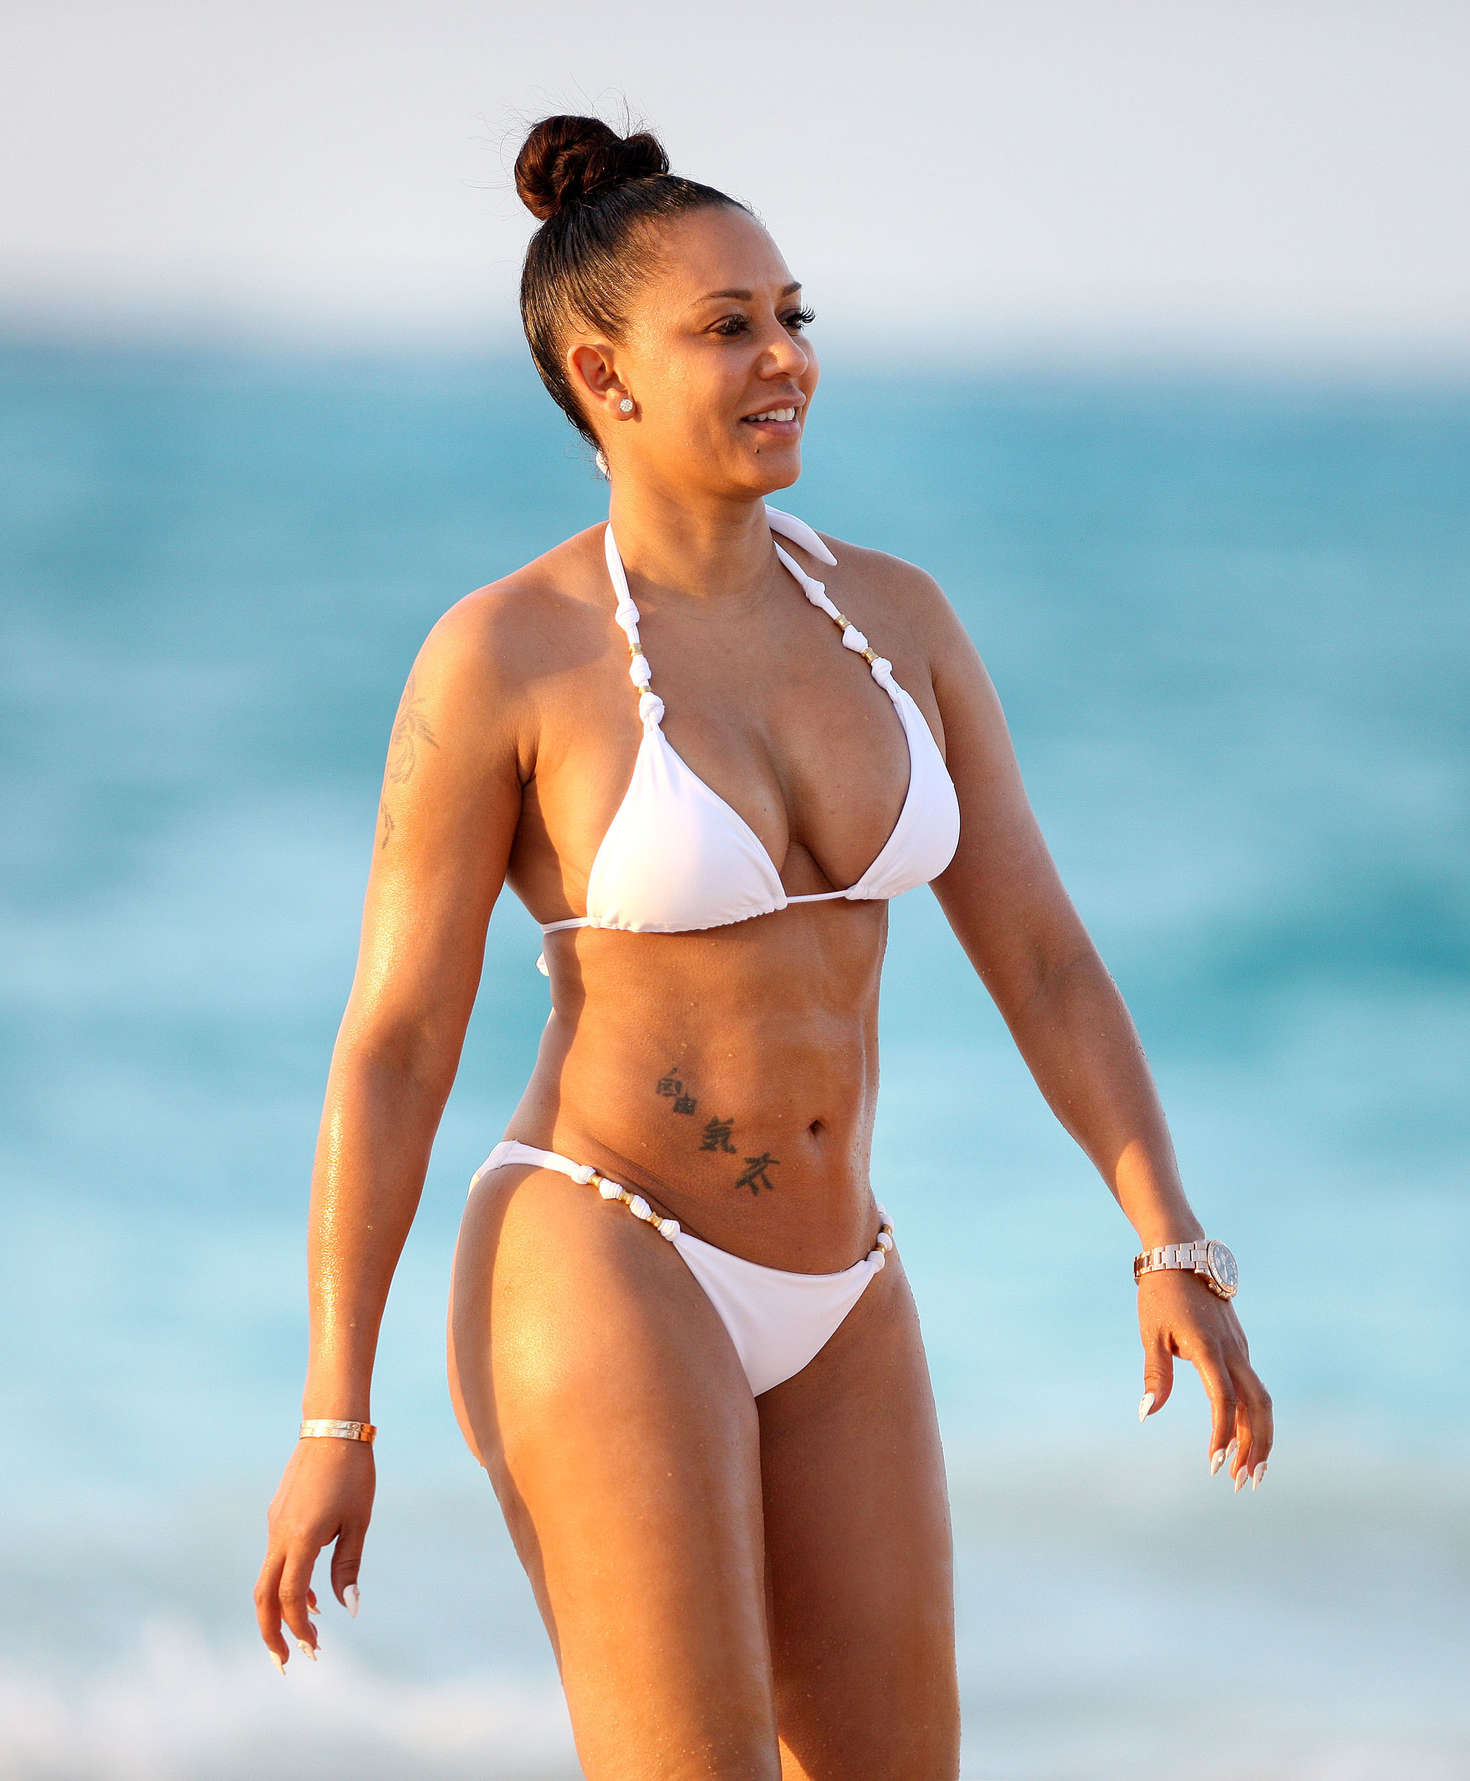 Melanie Brown in White Bikini in Turks & Caicos Islands